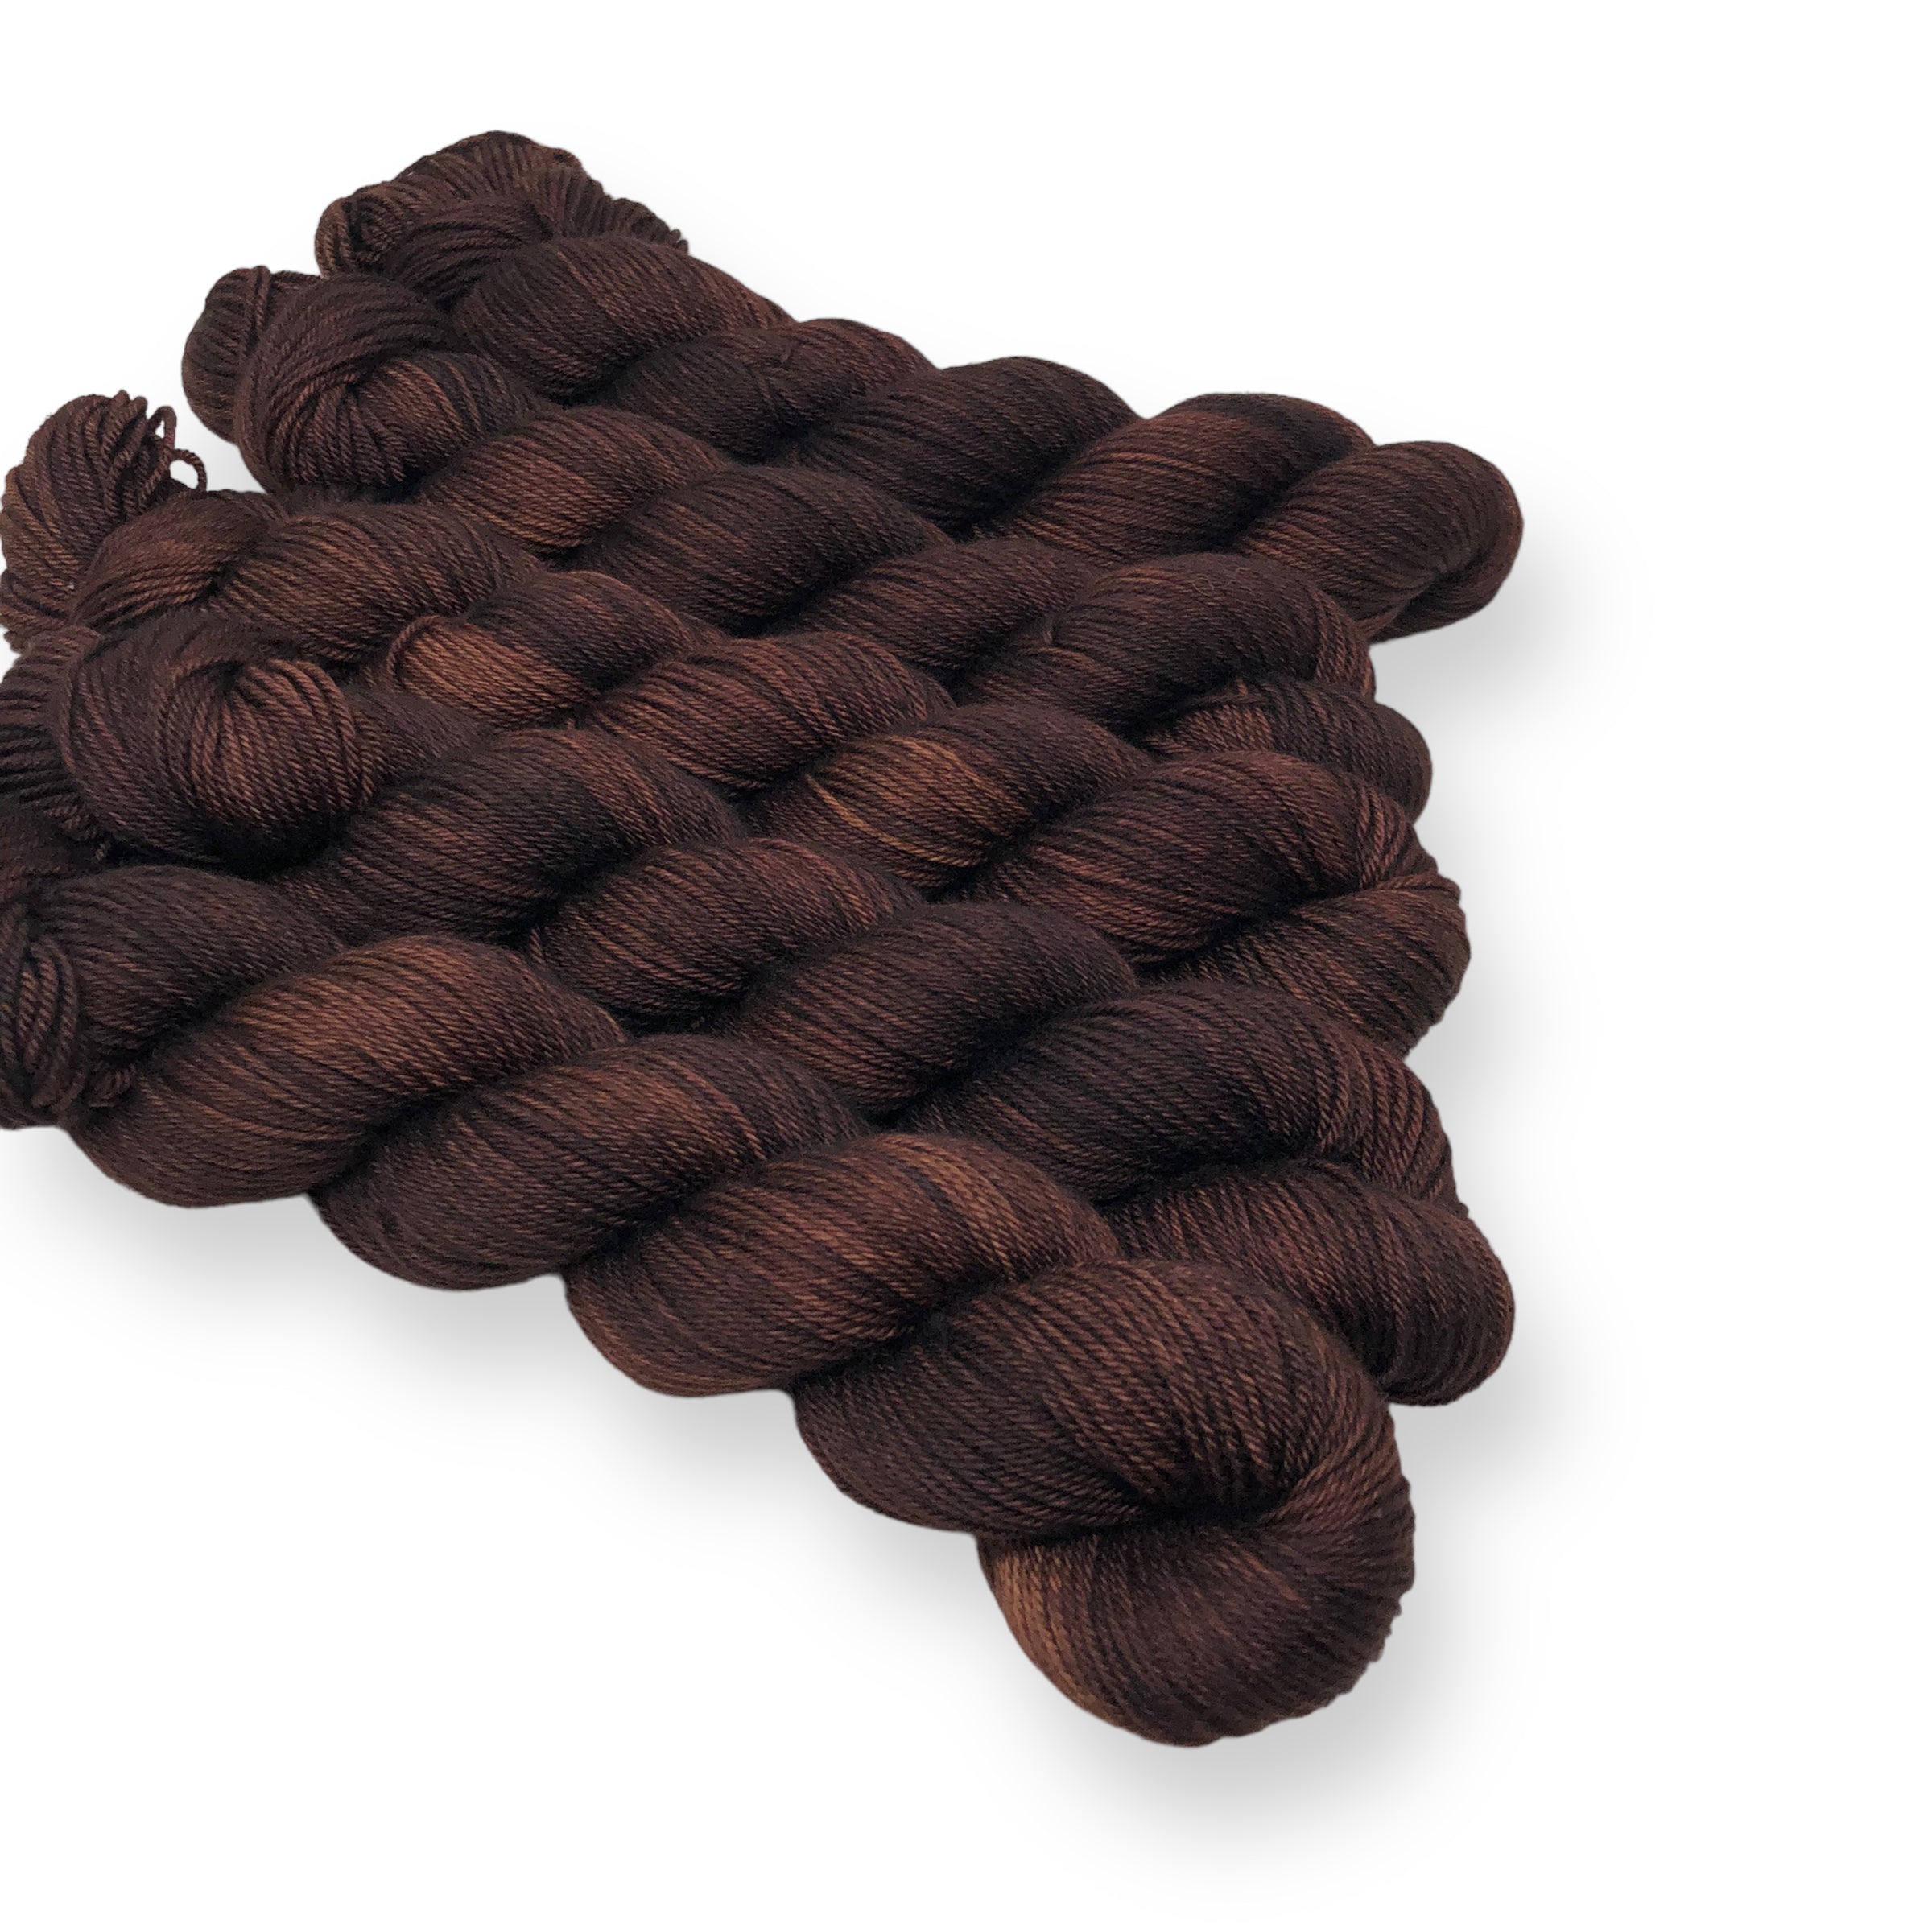 Chestnut - Delightful DK - the perfect sweater yarn